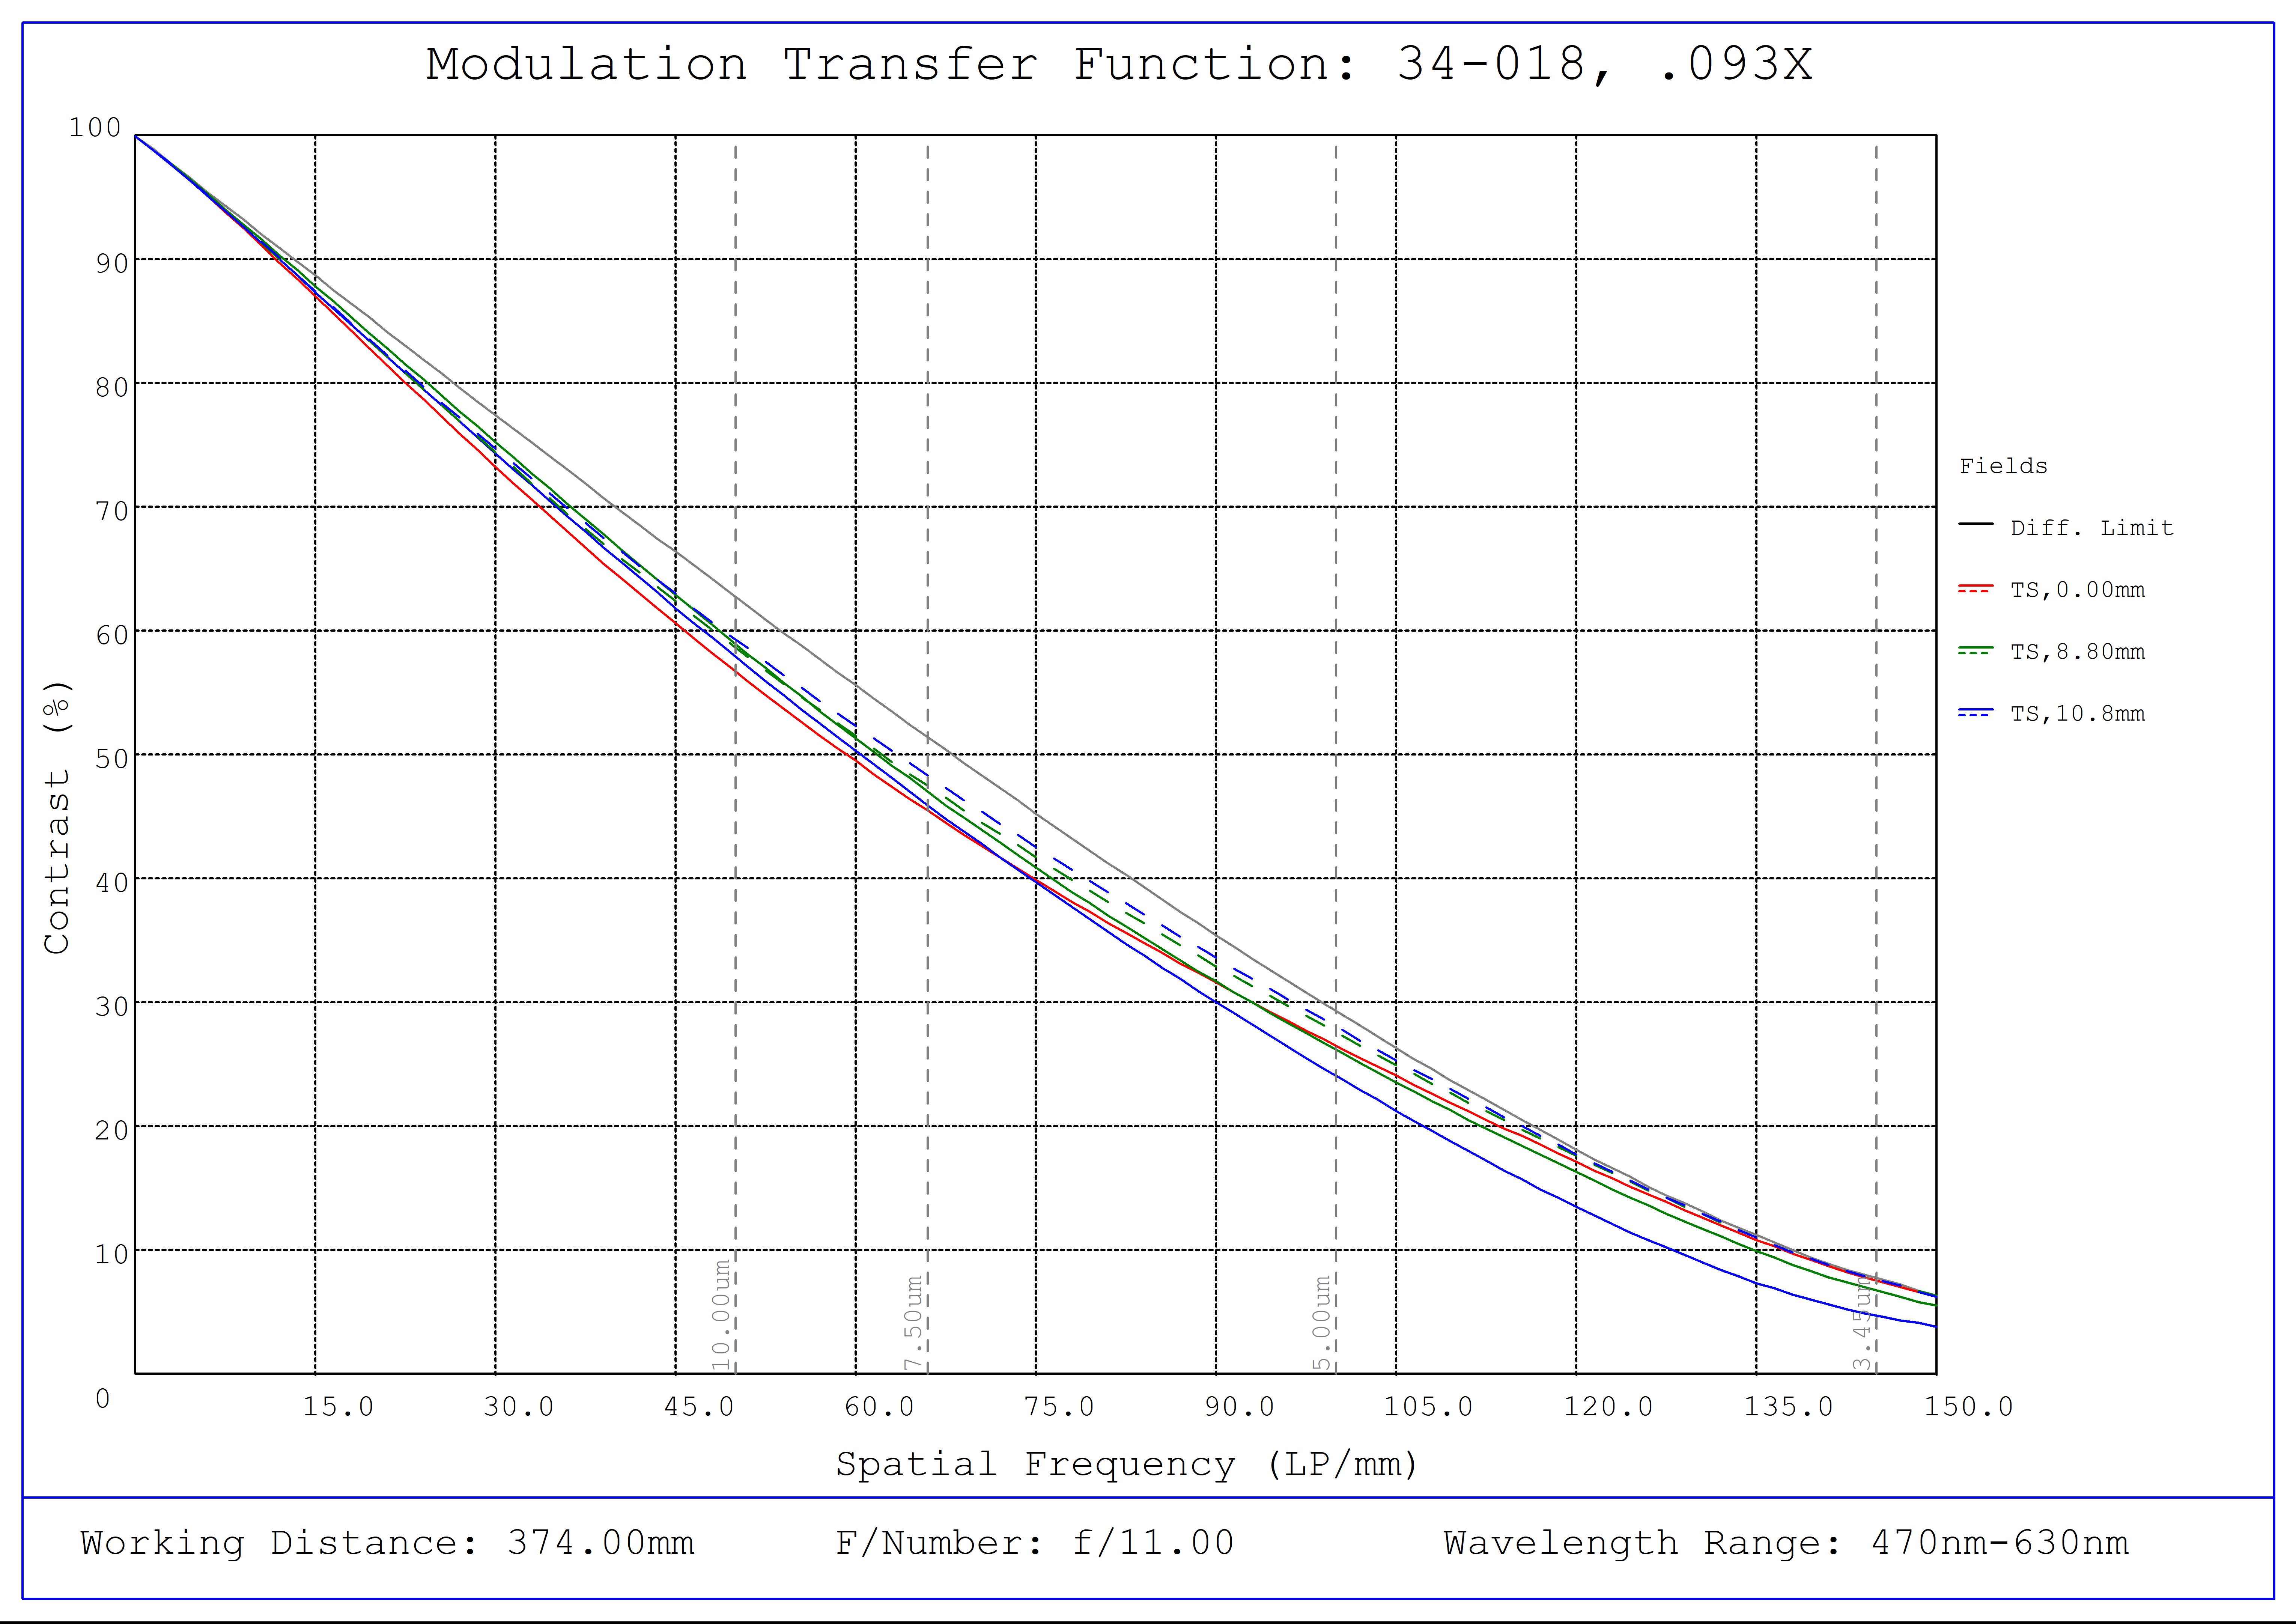 #34-018, 0.093X, 4/3" C-Mount TitanTL® Telecentric Lens, Modulated Transfer Function (MTF) Plot, 374mm Working Distance, f11